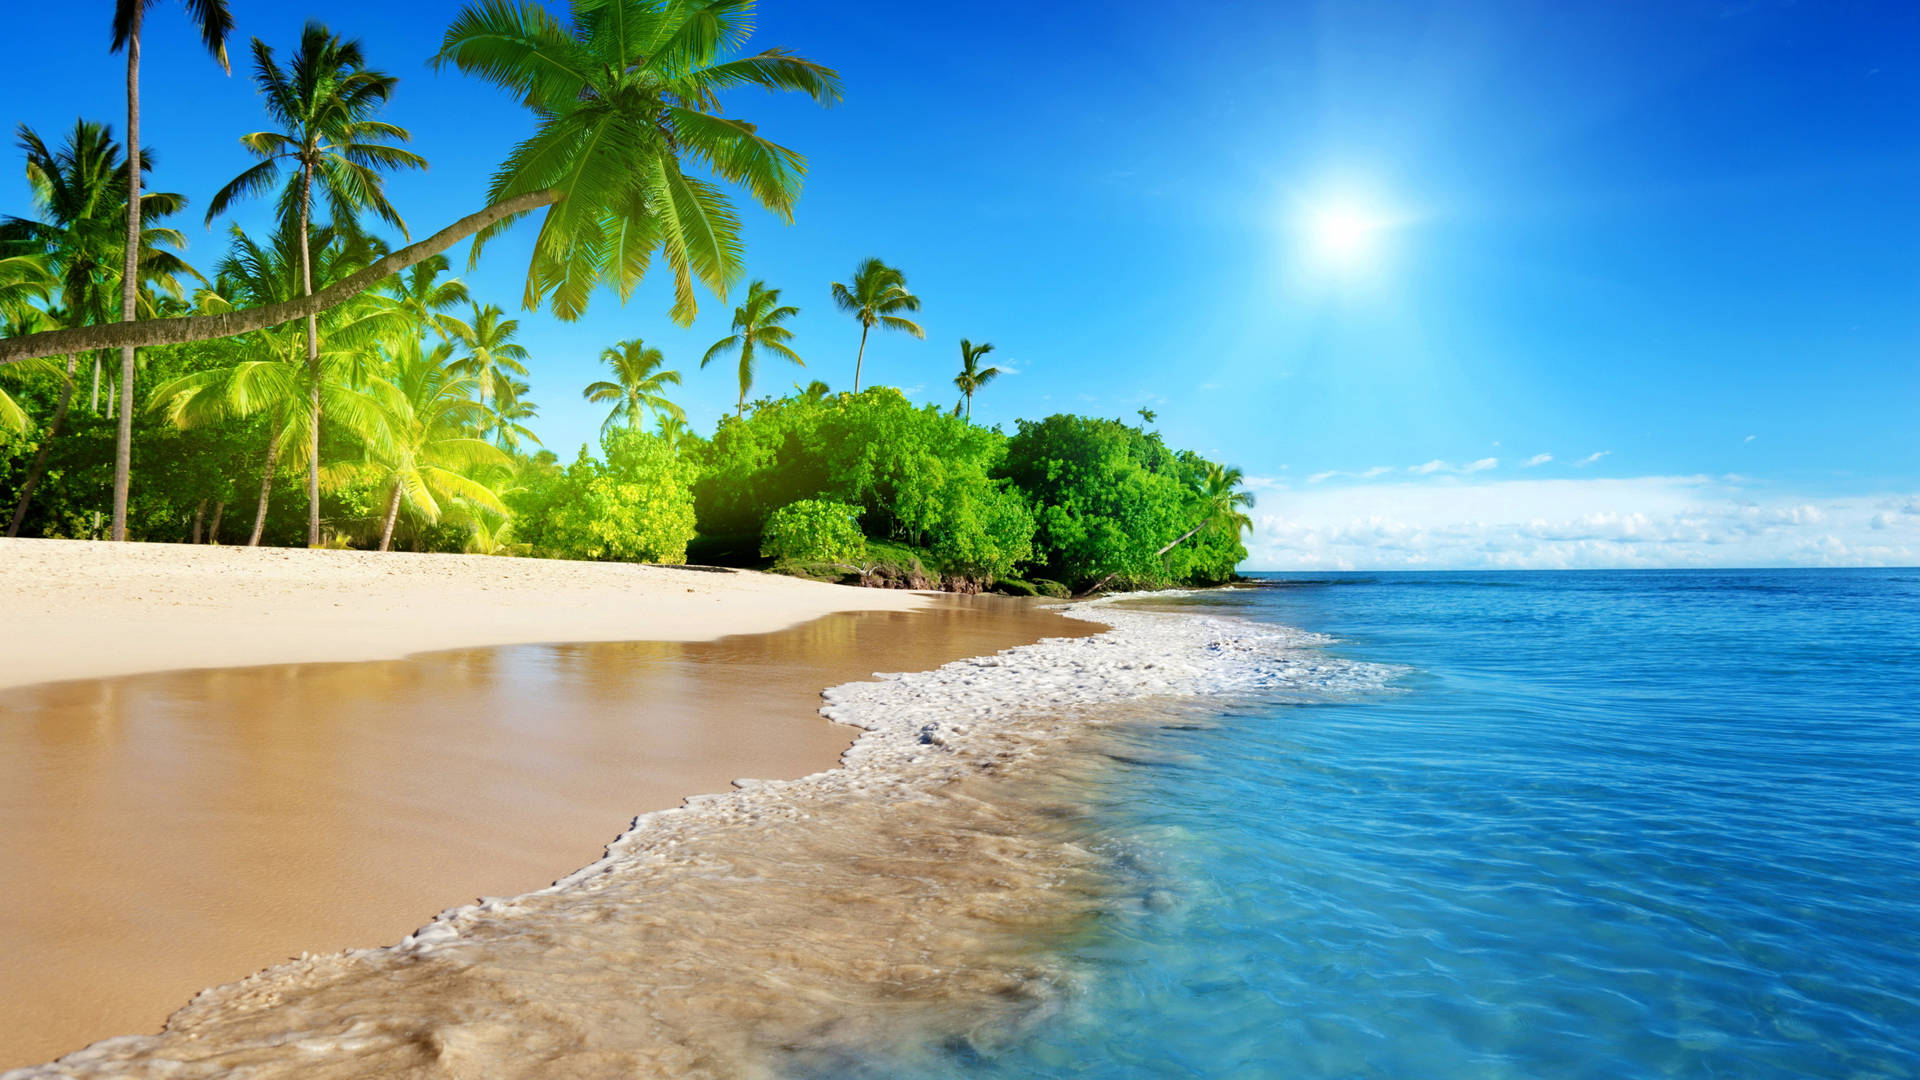 2560 X 1440 Tropical Seascape Picture